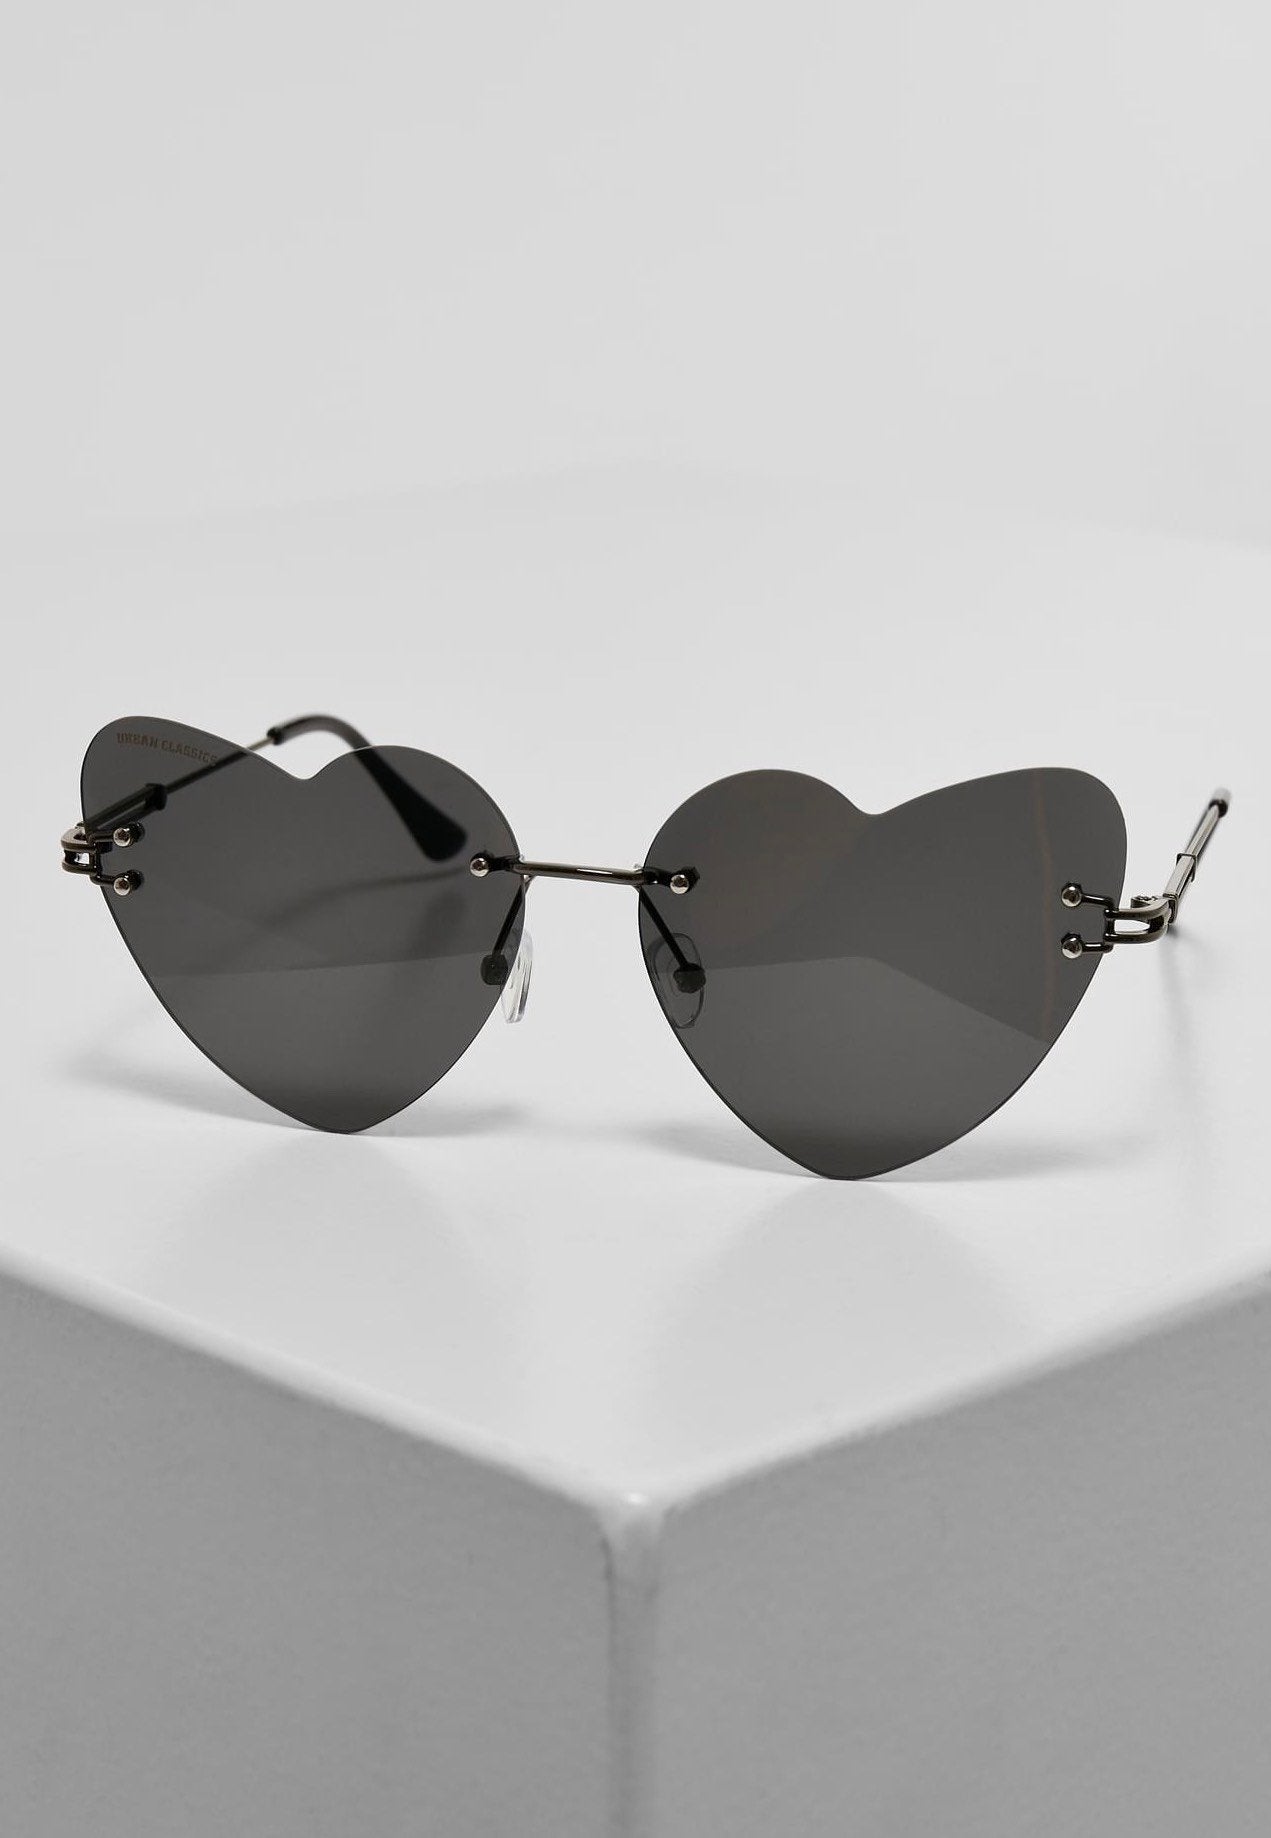 Urban Classics - Heart With Chains Black/Black - Sunglasses